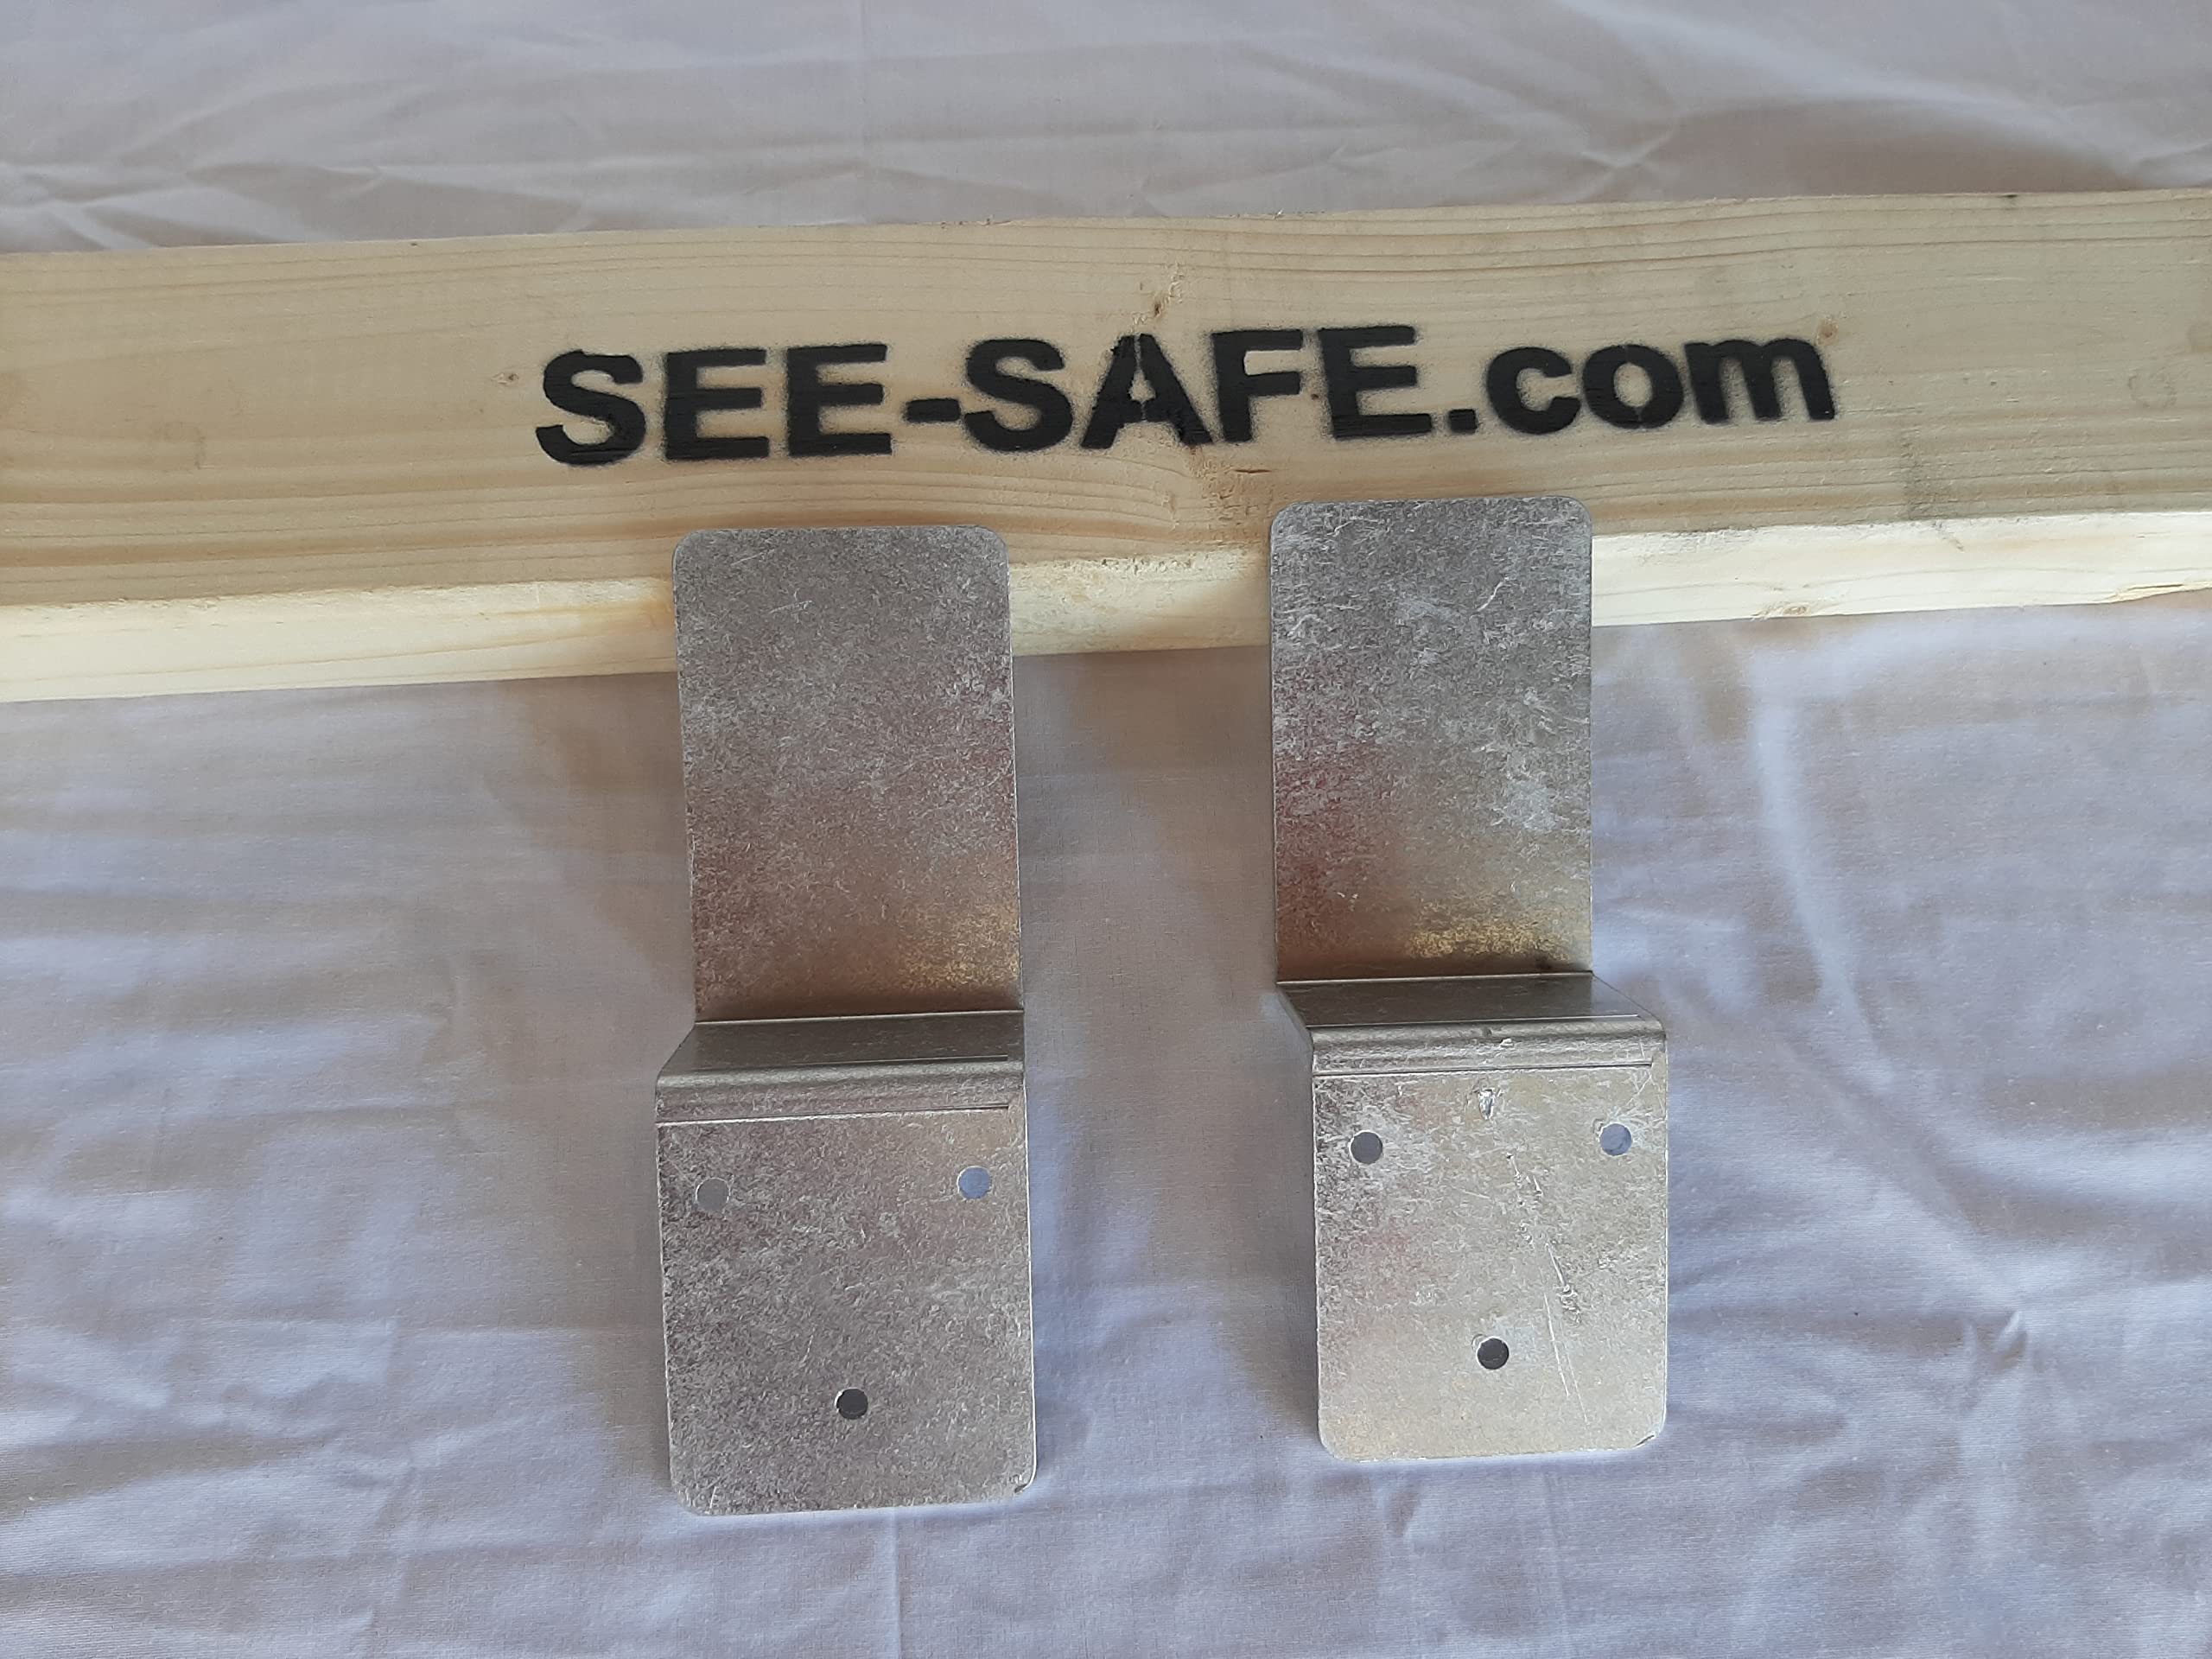 SEE-SAFE Drop Open Bar Security Barn Door Lock Brackets Fits 2x4 Boards 3" Wide 1 Pair Stopper Jammer Barricade